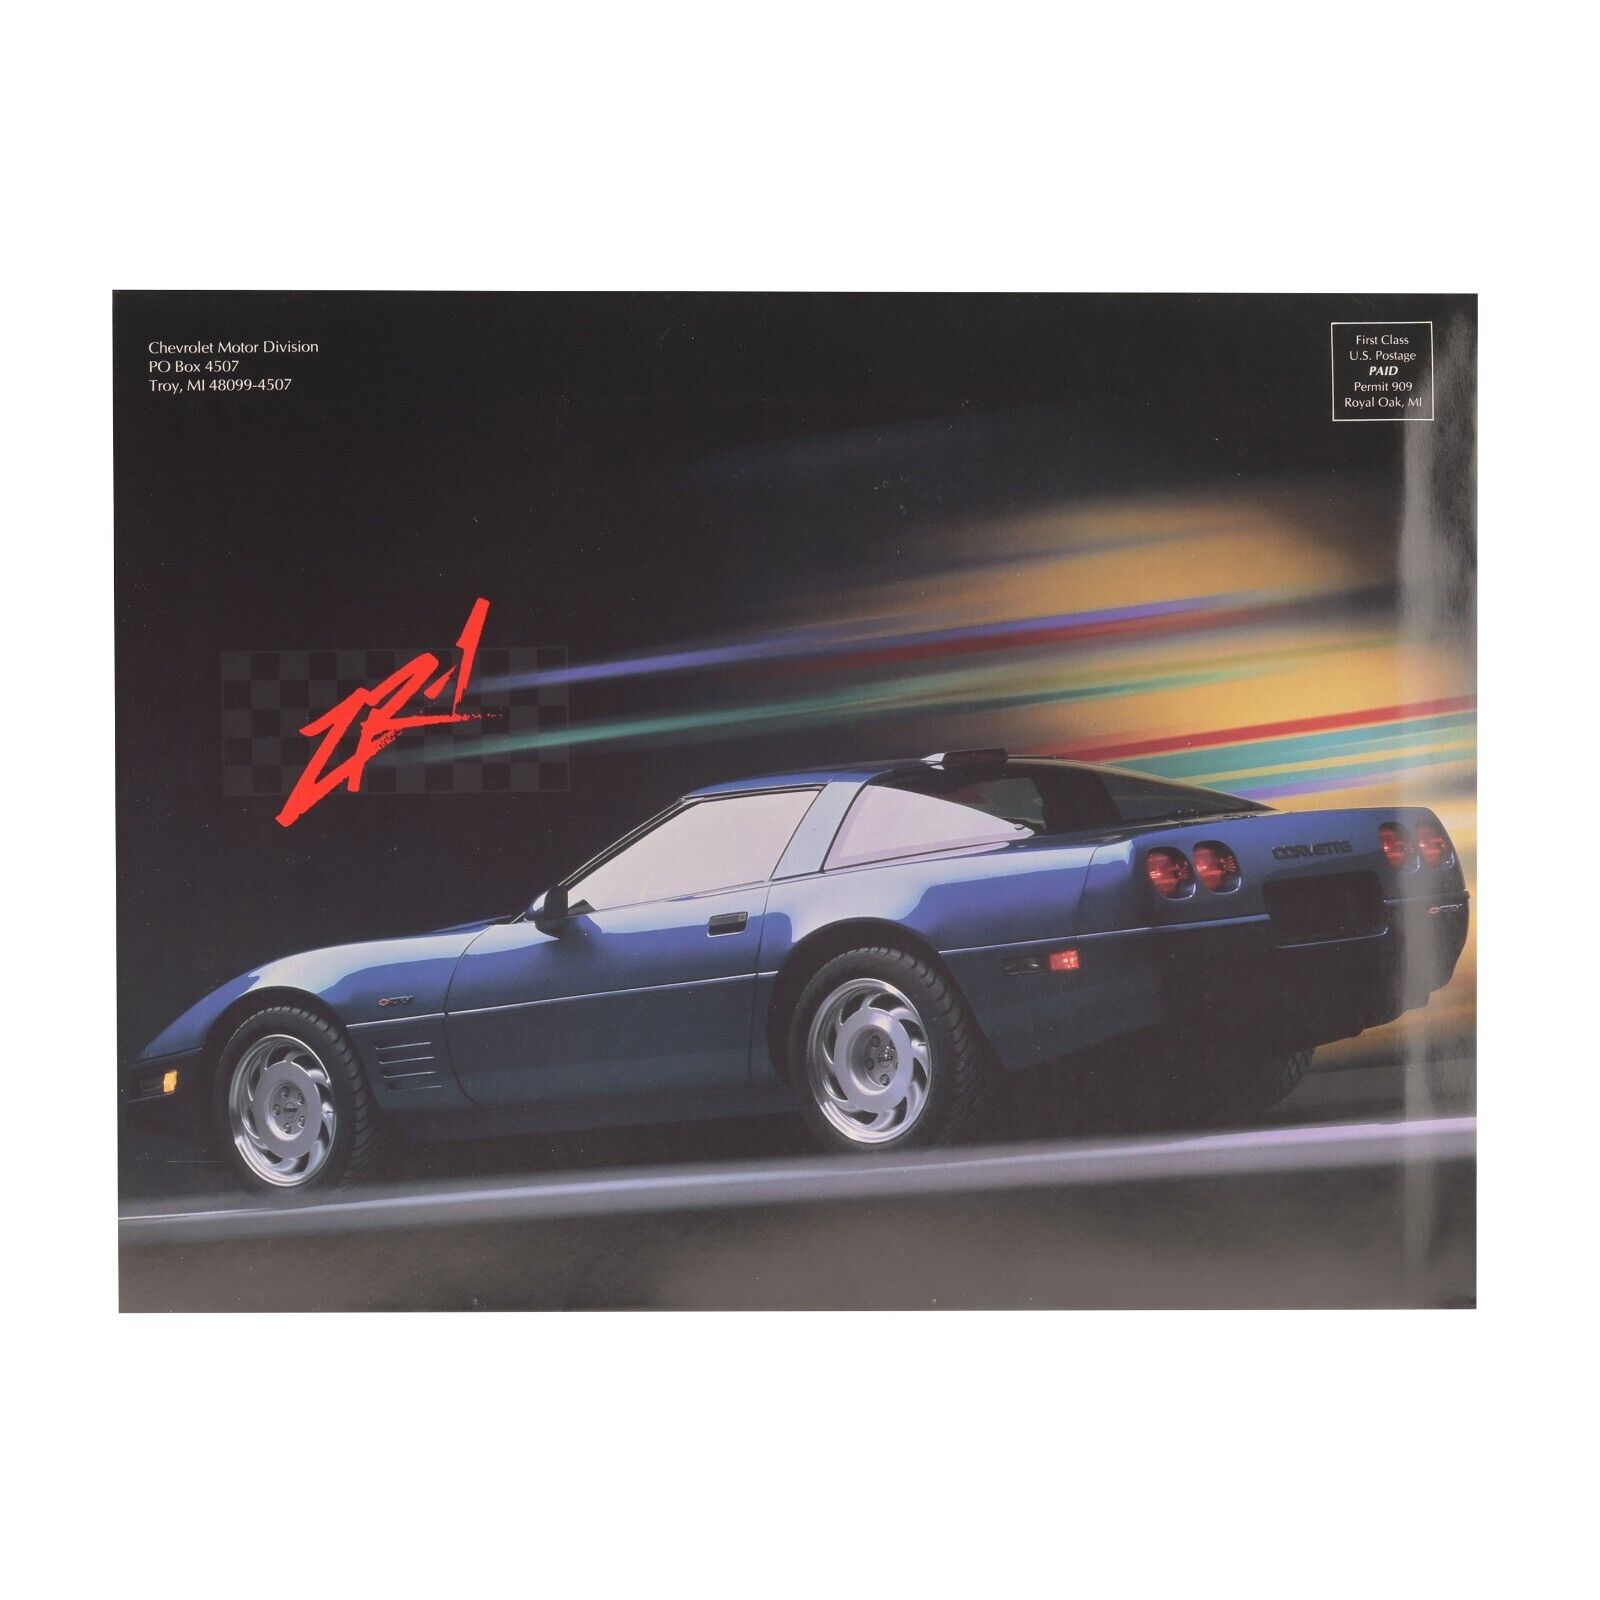 Corvette ZR-1 1991 Pro Athlete Sales Brochure and Mailer Envelope NOS Original